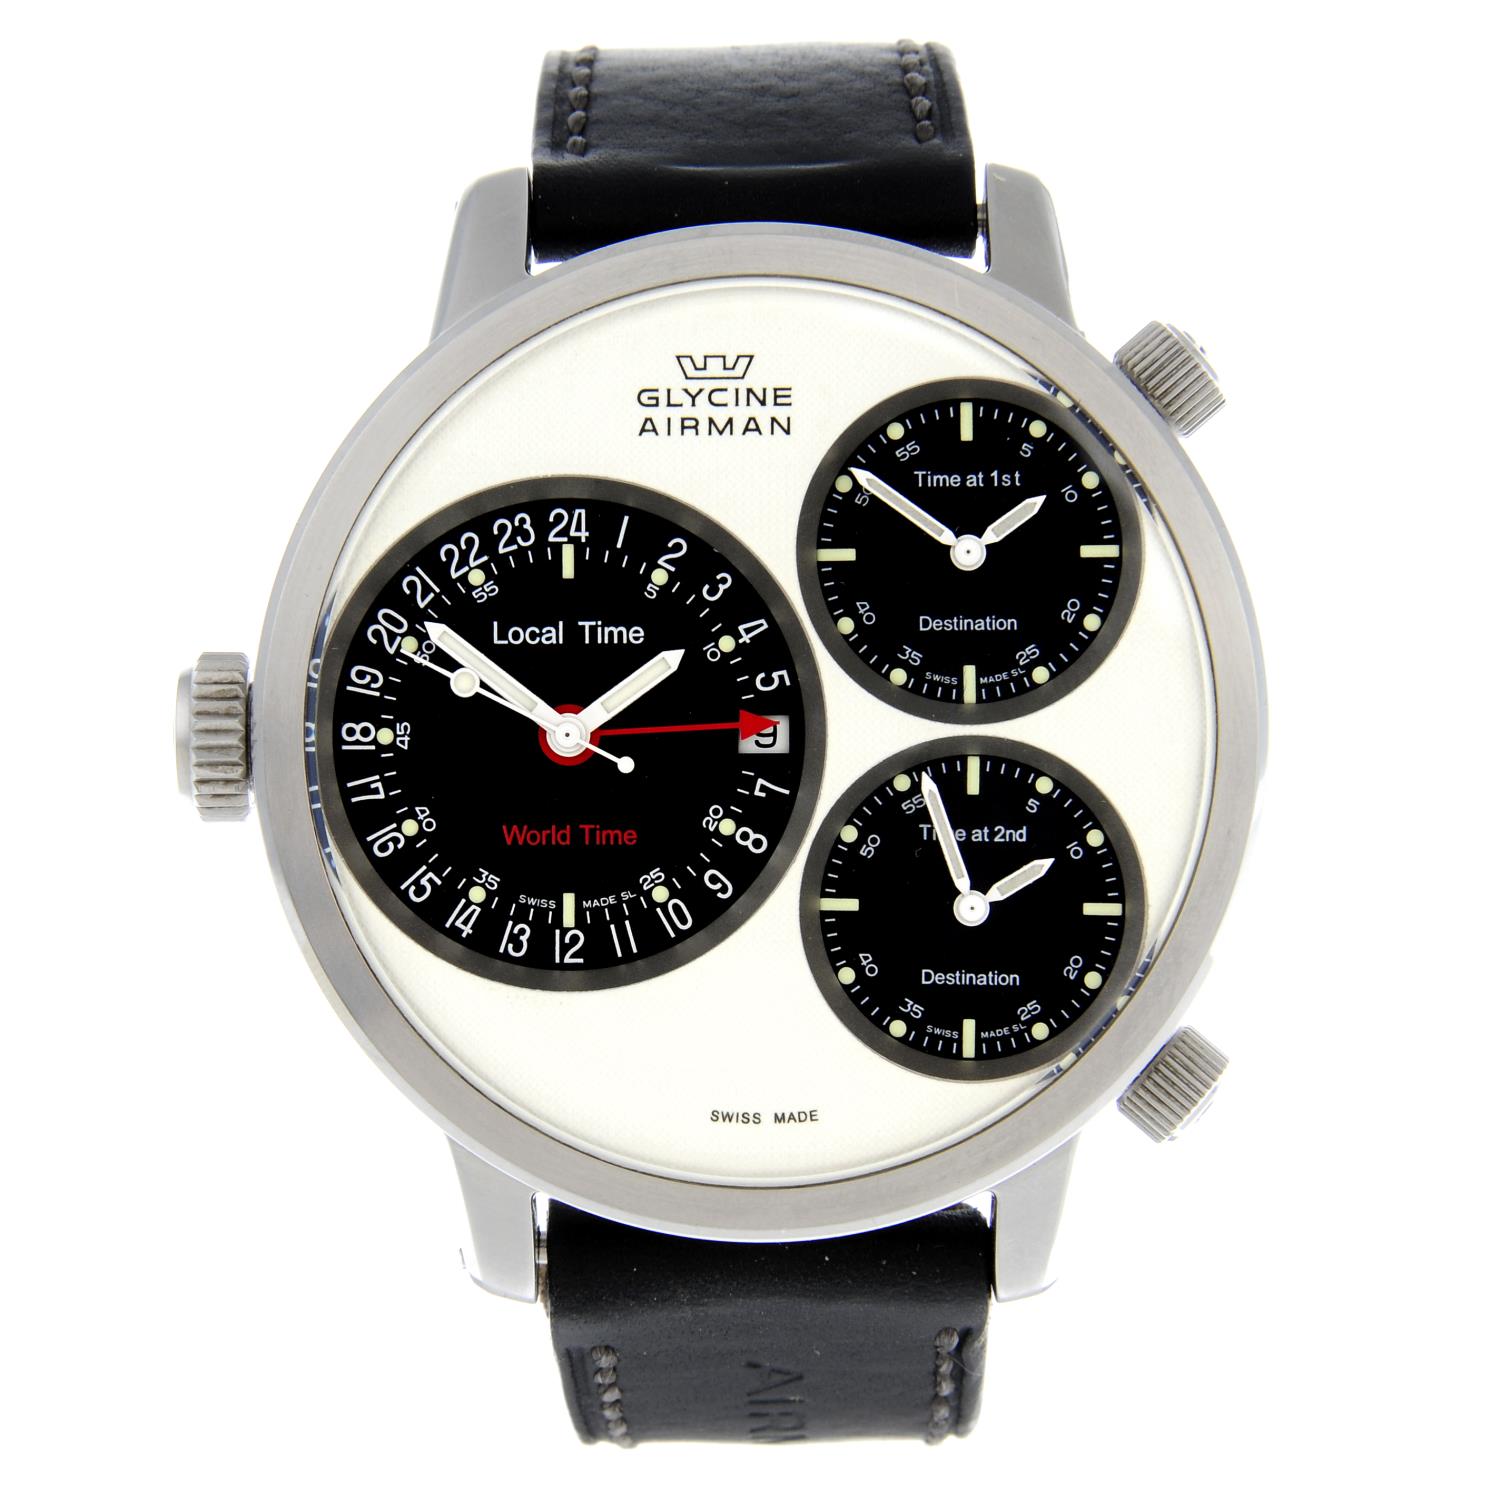 GLYCINE - an Airman7 Crosswise wristwatch.